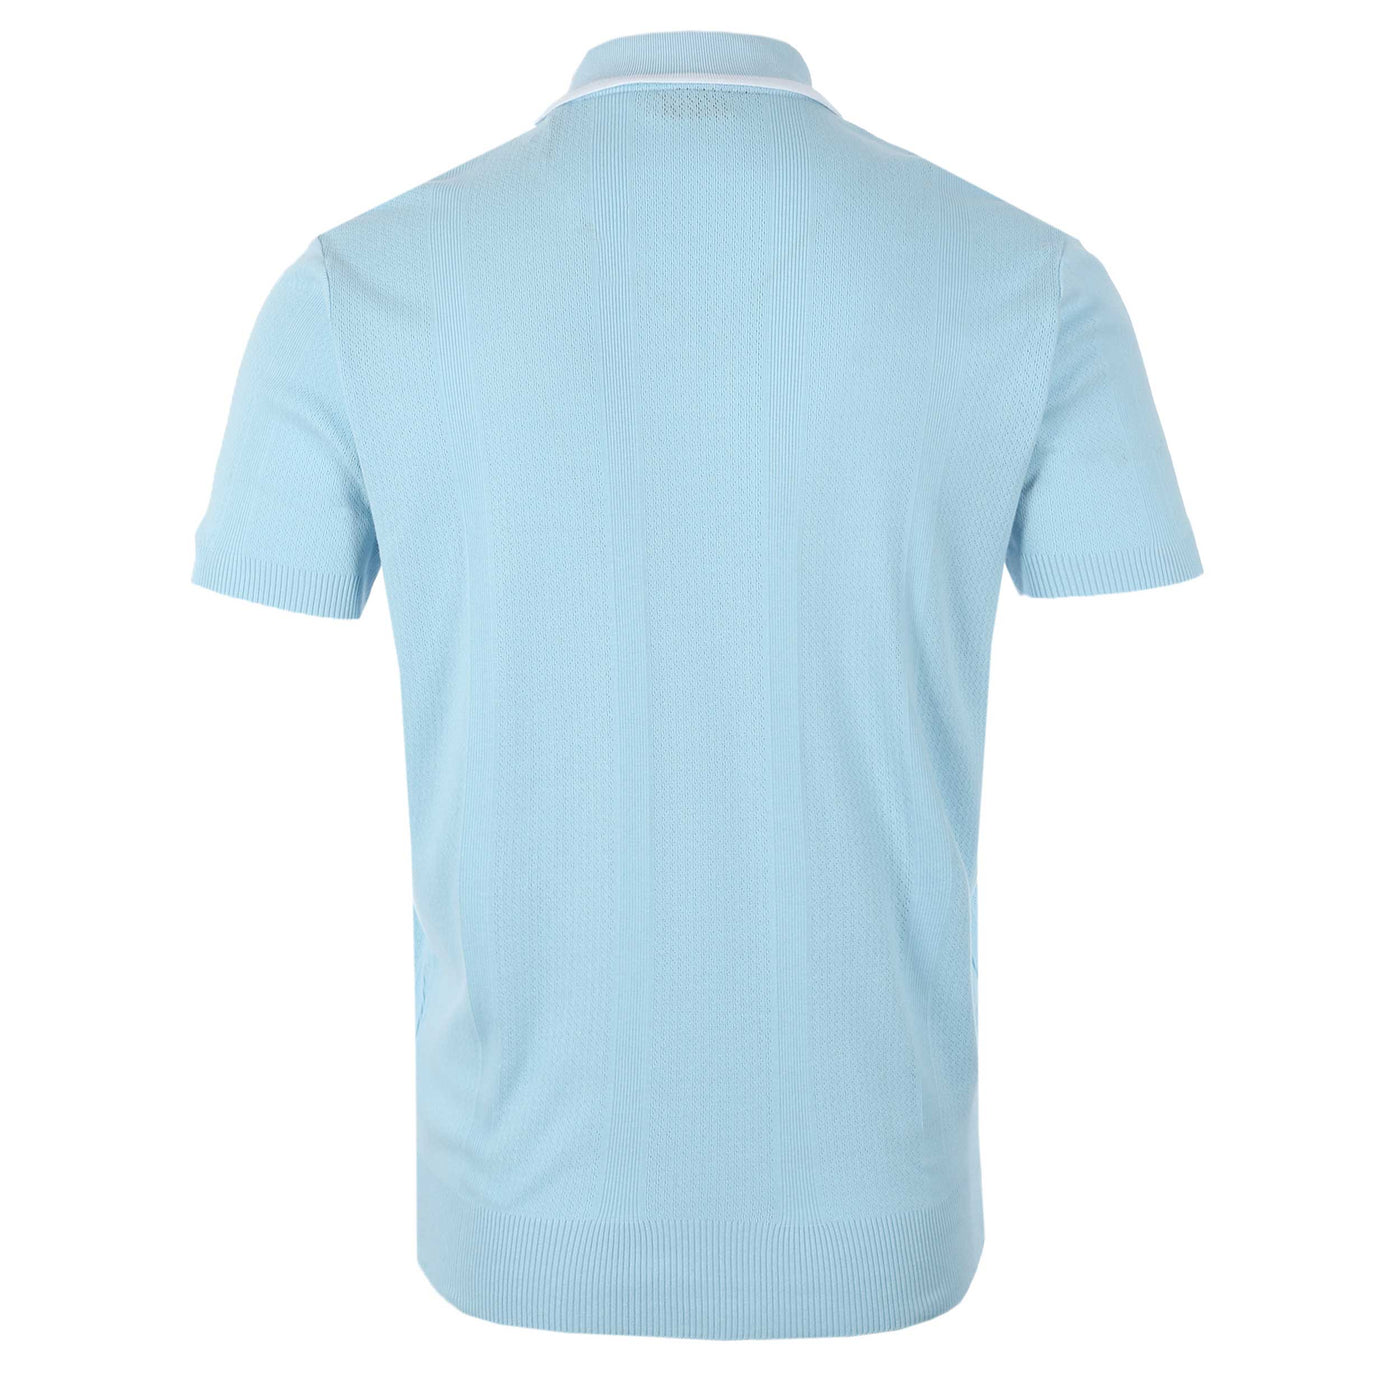 Sandbanks Jacquard Stripe Knit Polo Shirt in Crystal Blue Back